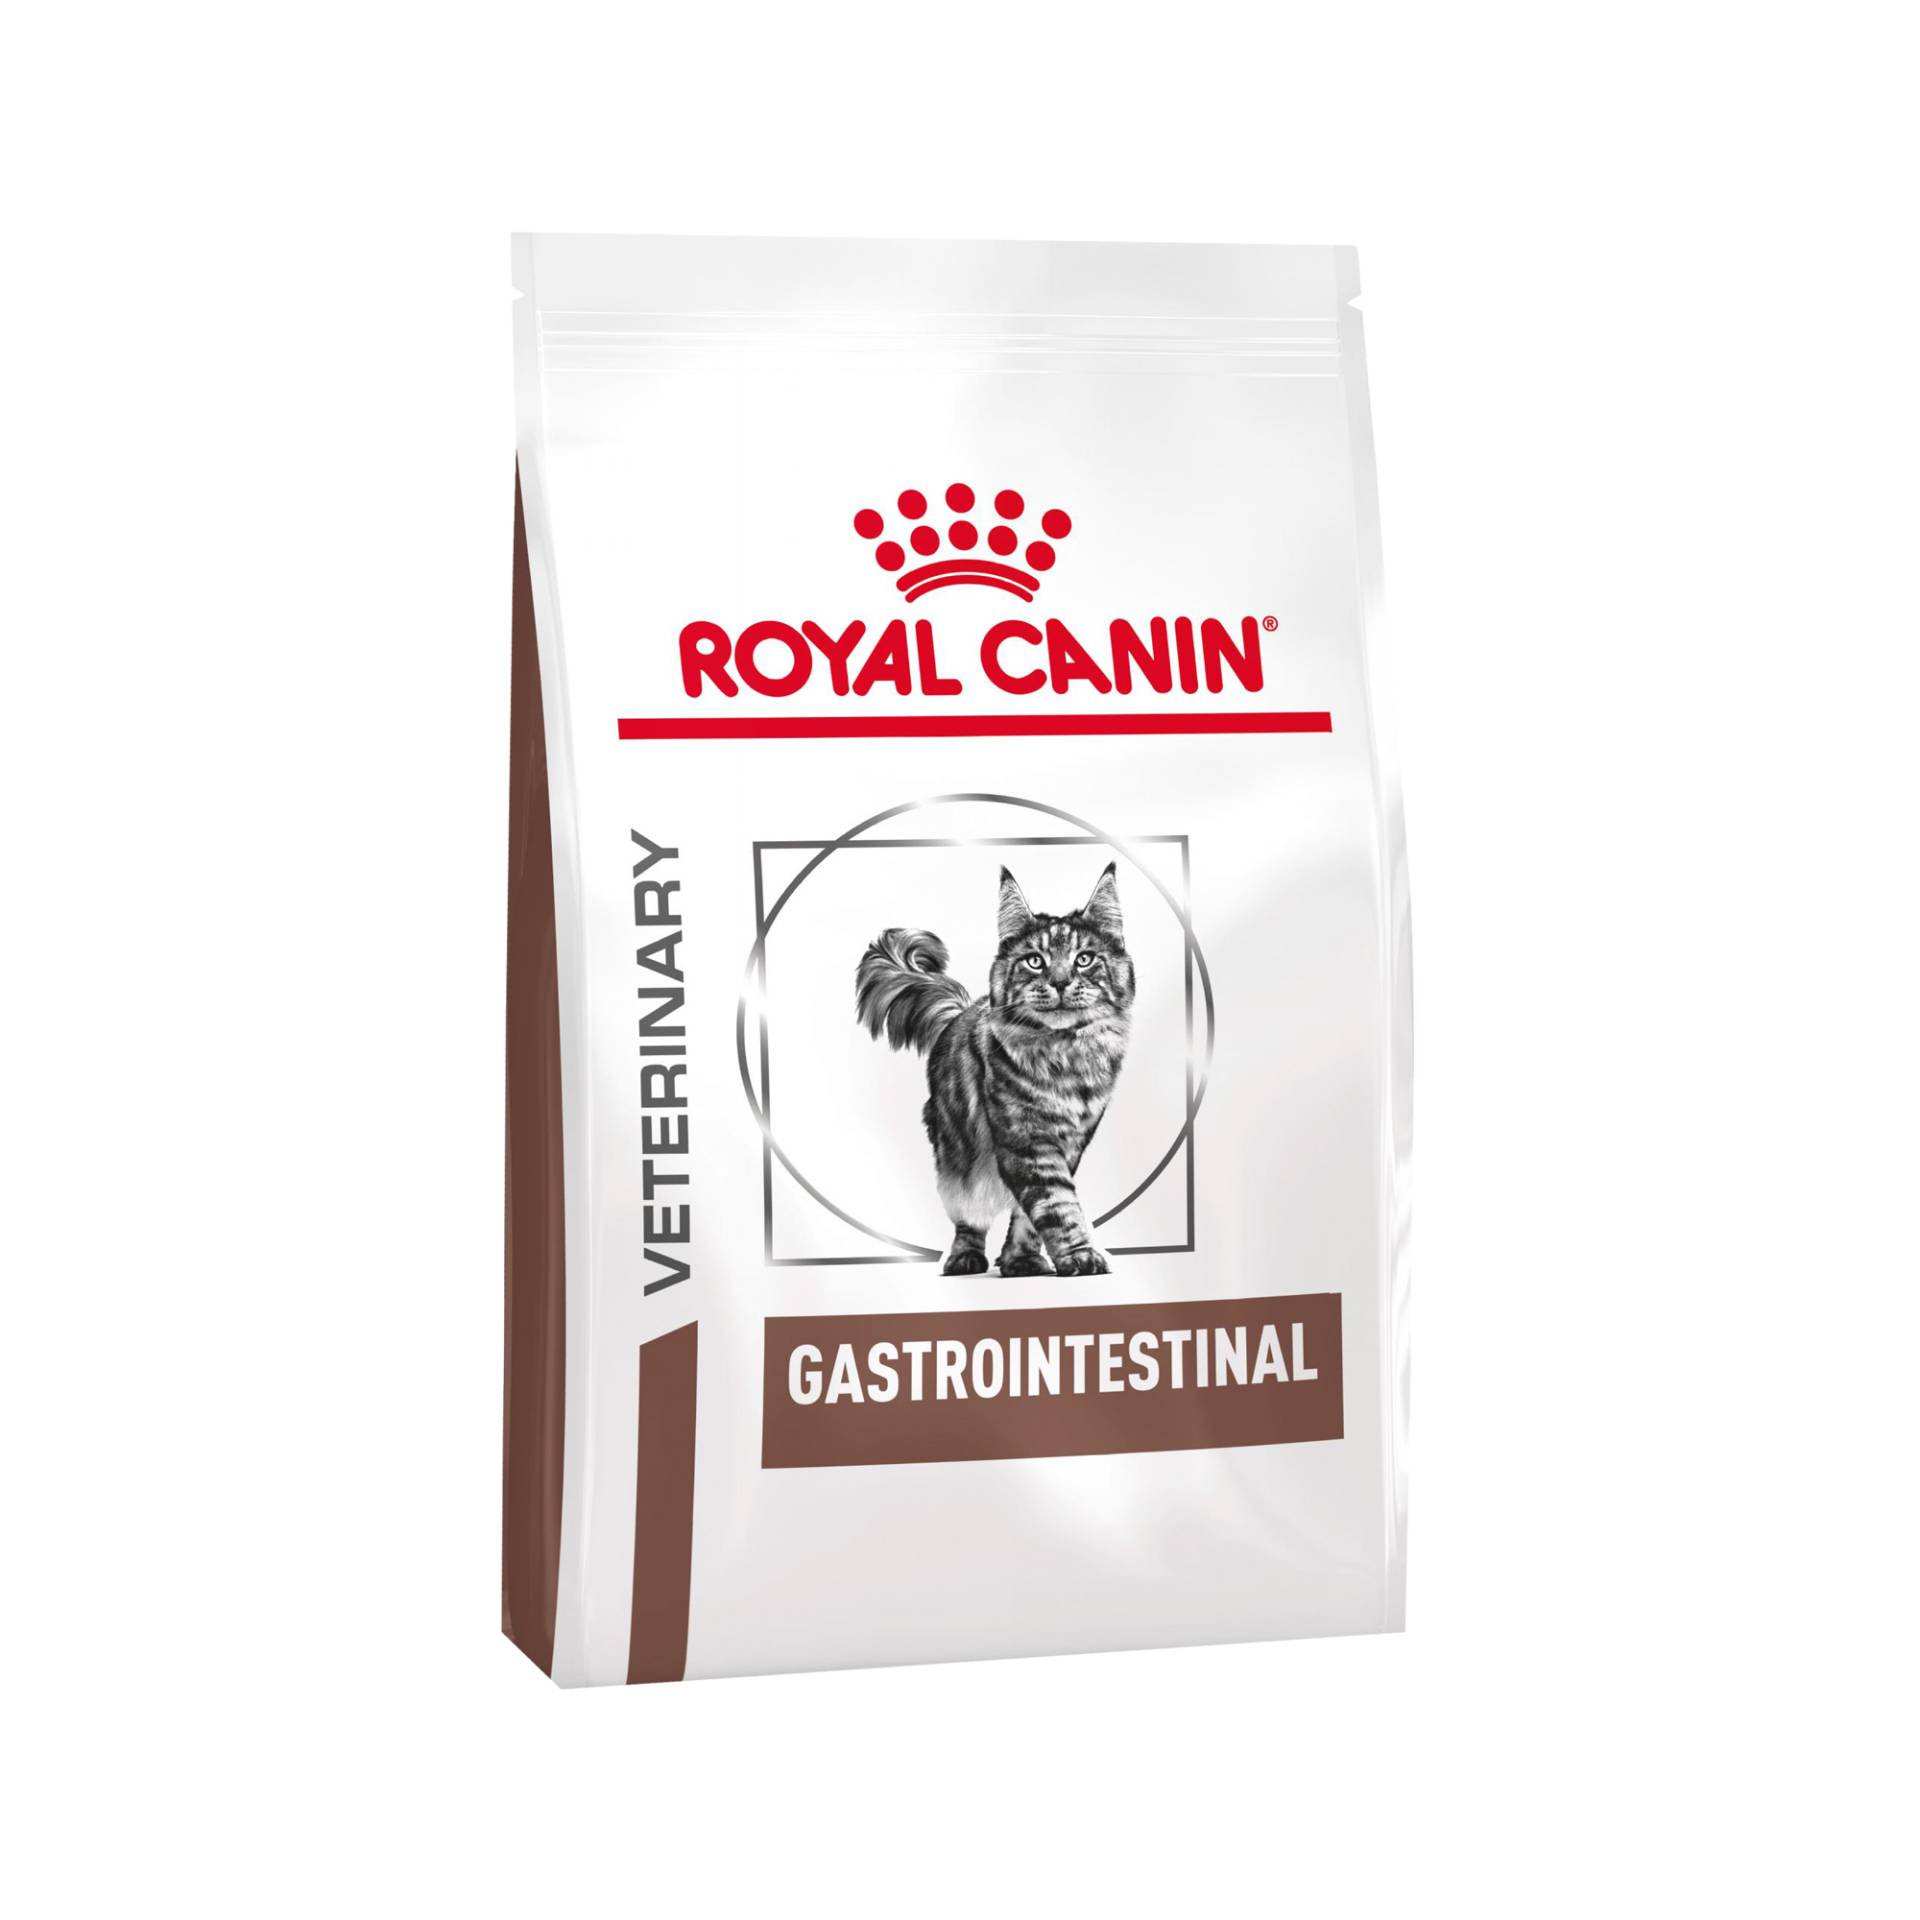 Royal Canin Gastro Intestinal Katze Kombi-Paket - 2 kg + 12 x 85 g von Royal Canin